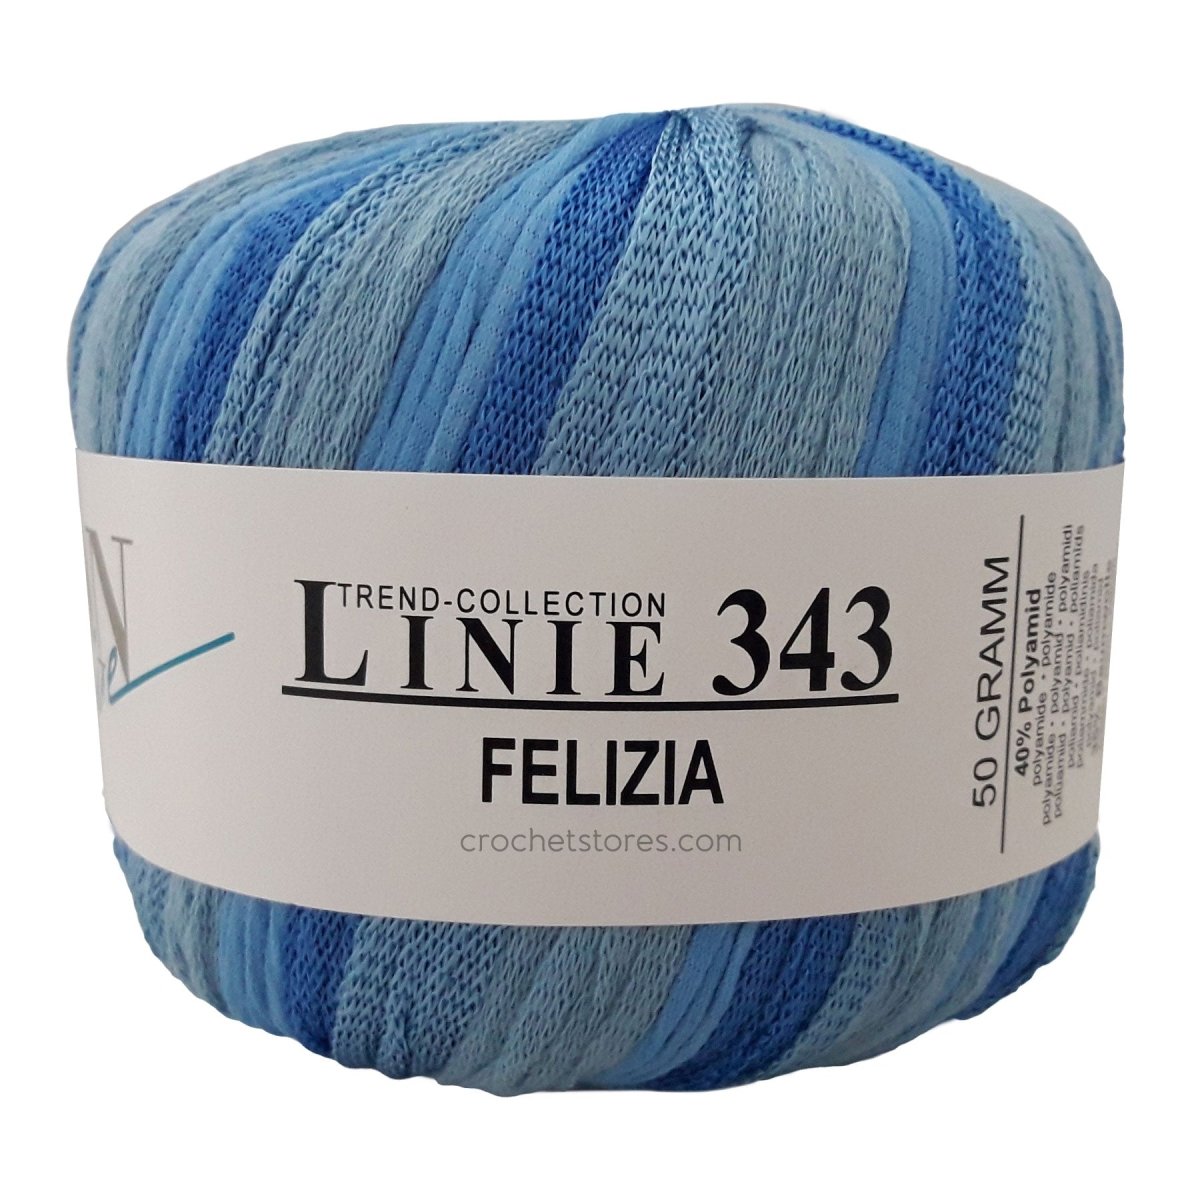 FELIZIA - Crochetstores110343-044014366146759